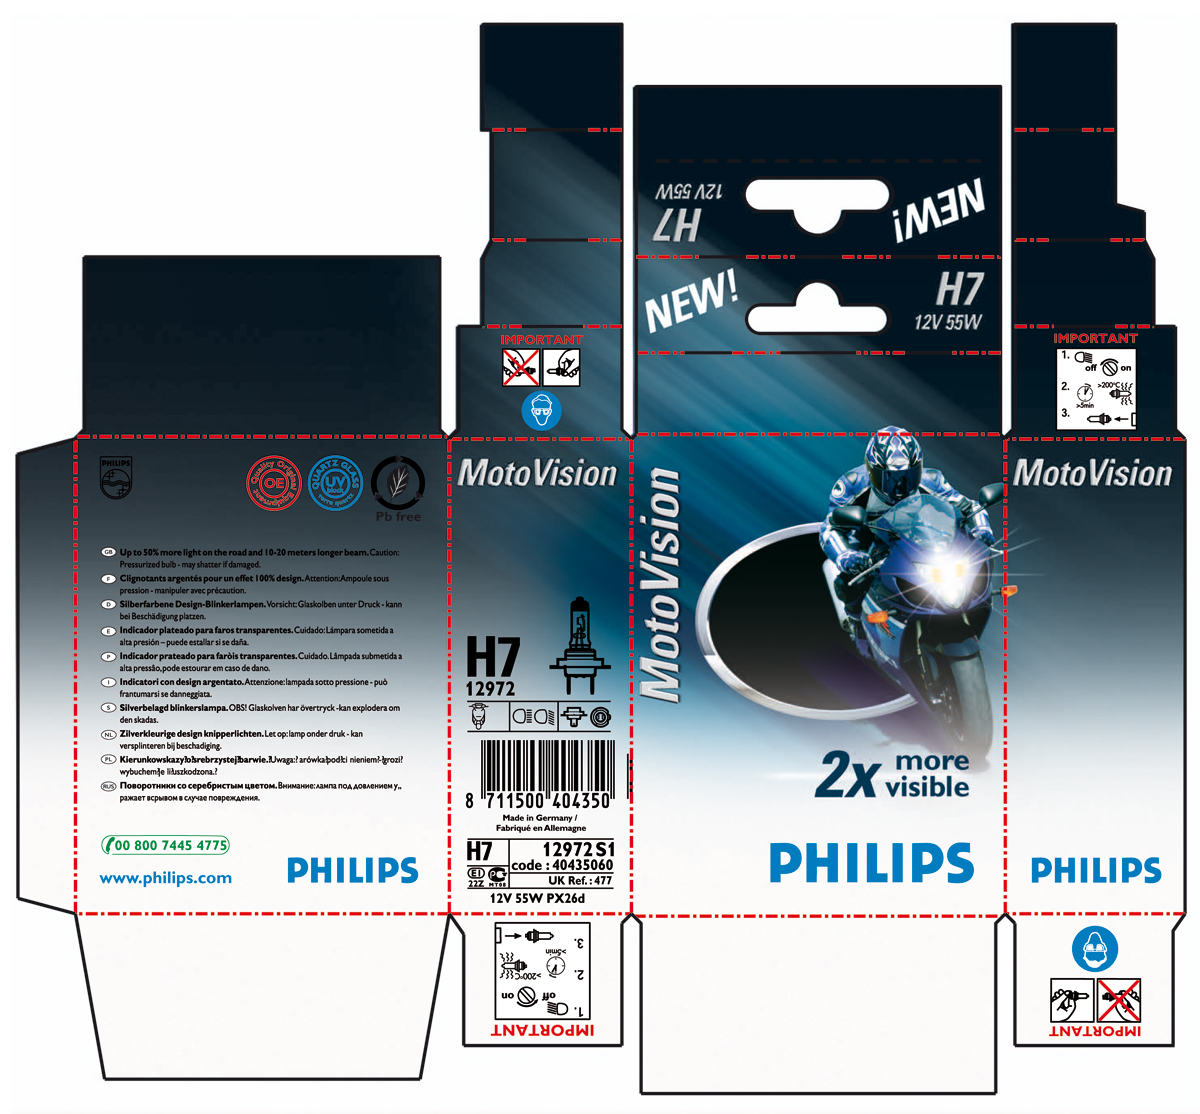 Philips MotoVision two-wheeler lighting packaging